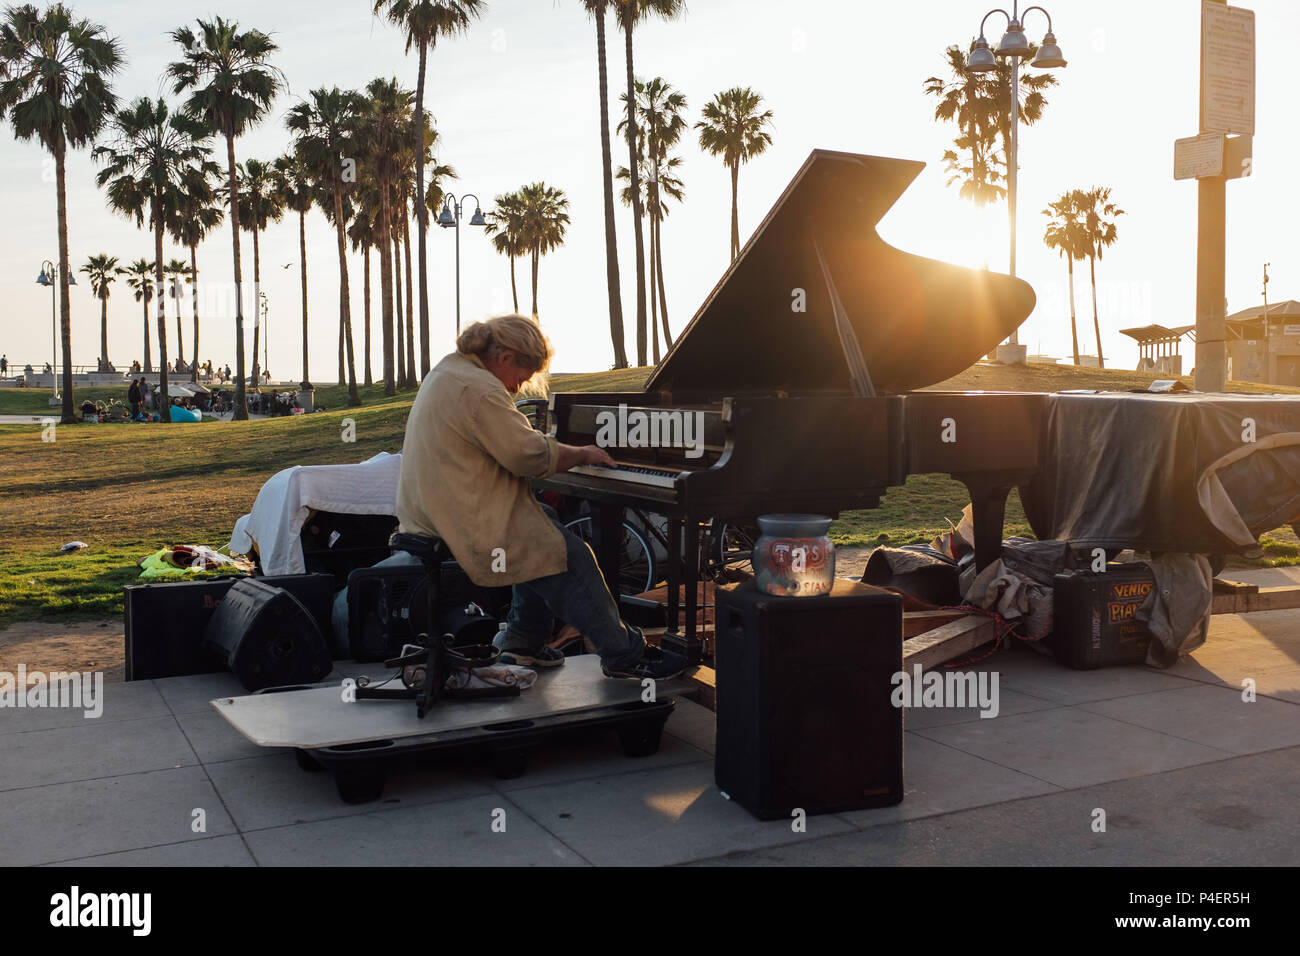 Artist perform at broadwalk in Venice Beach, CA USA Stock Photo